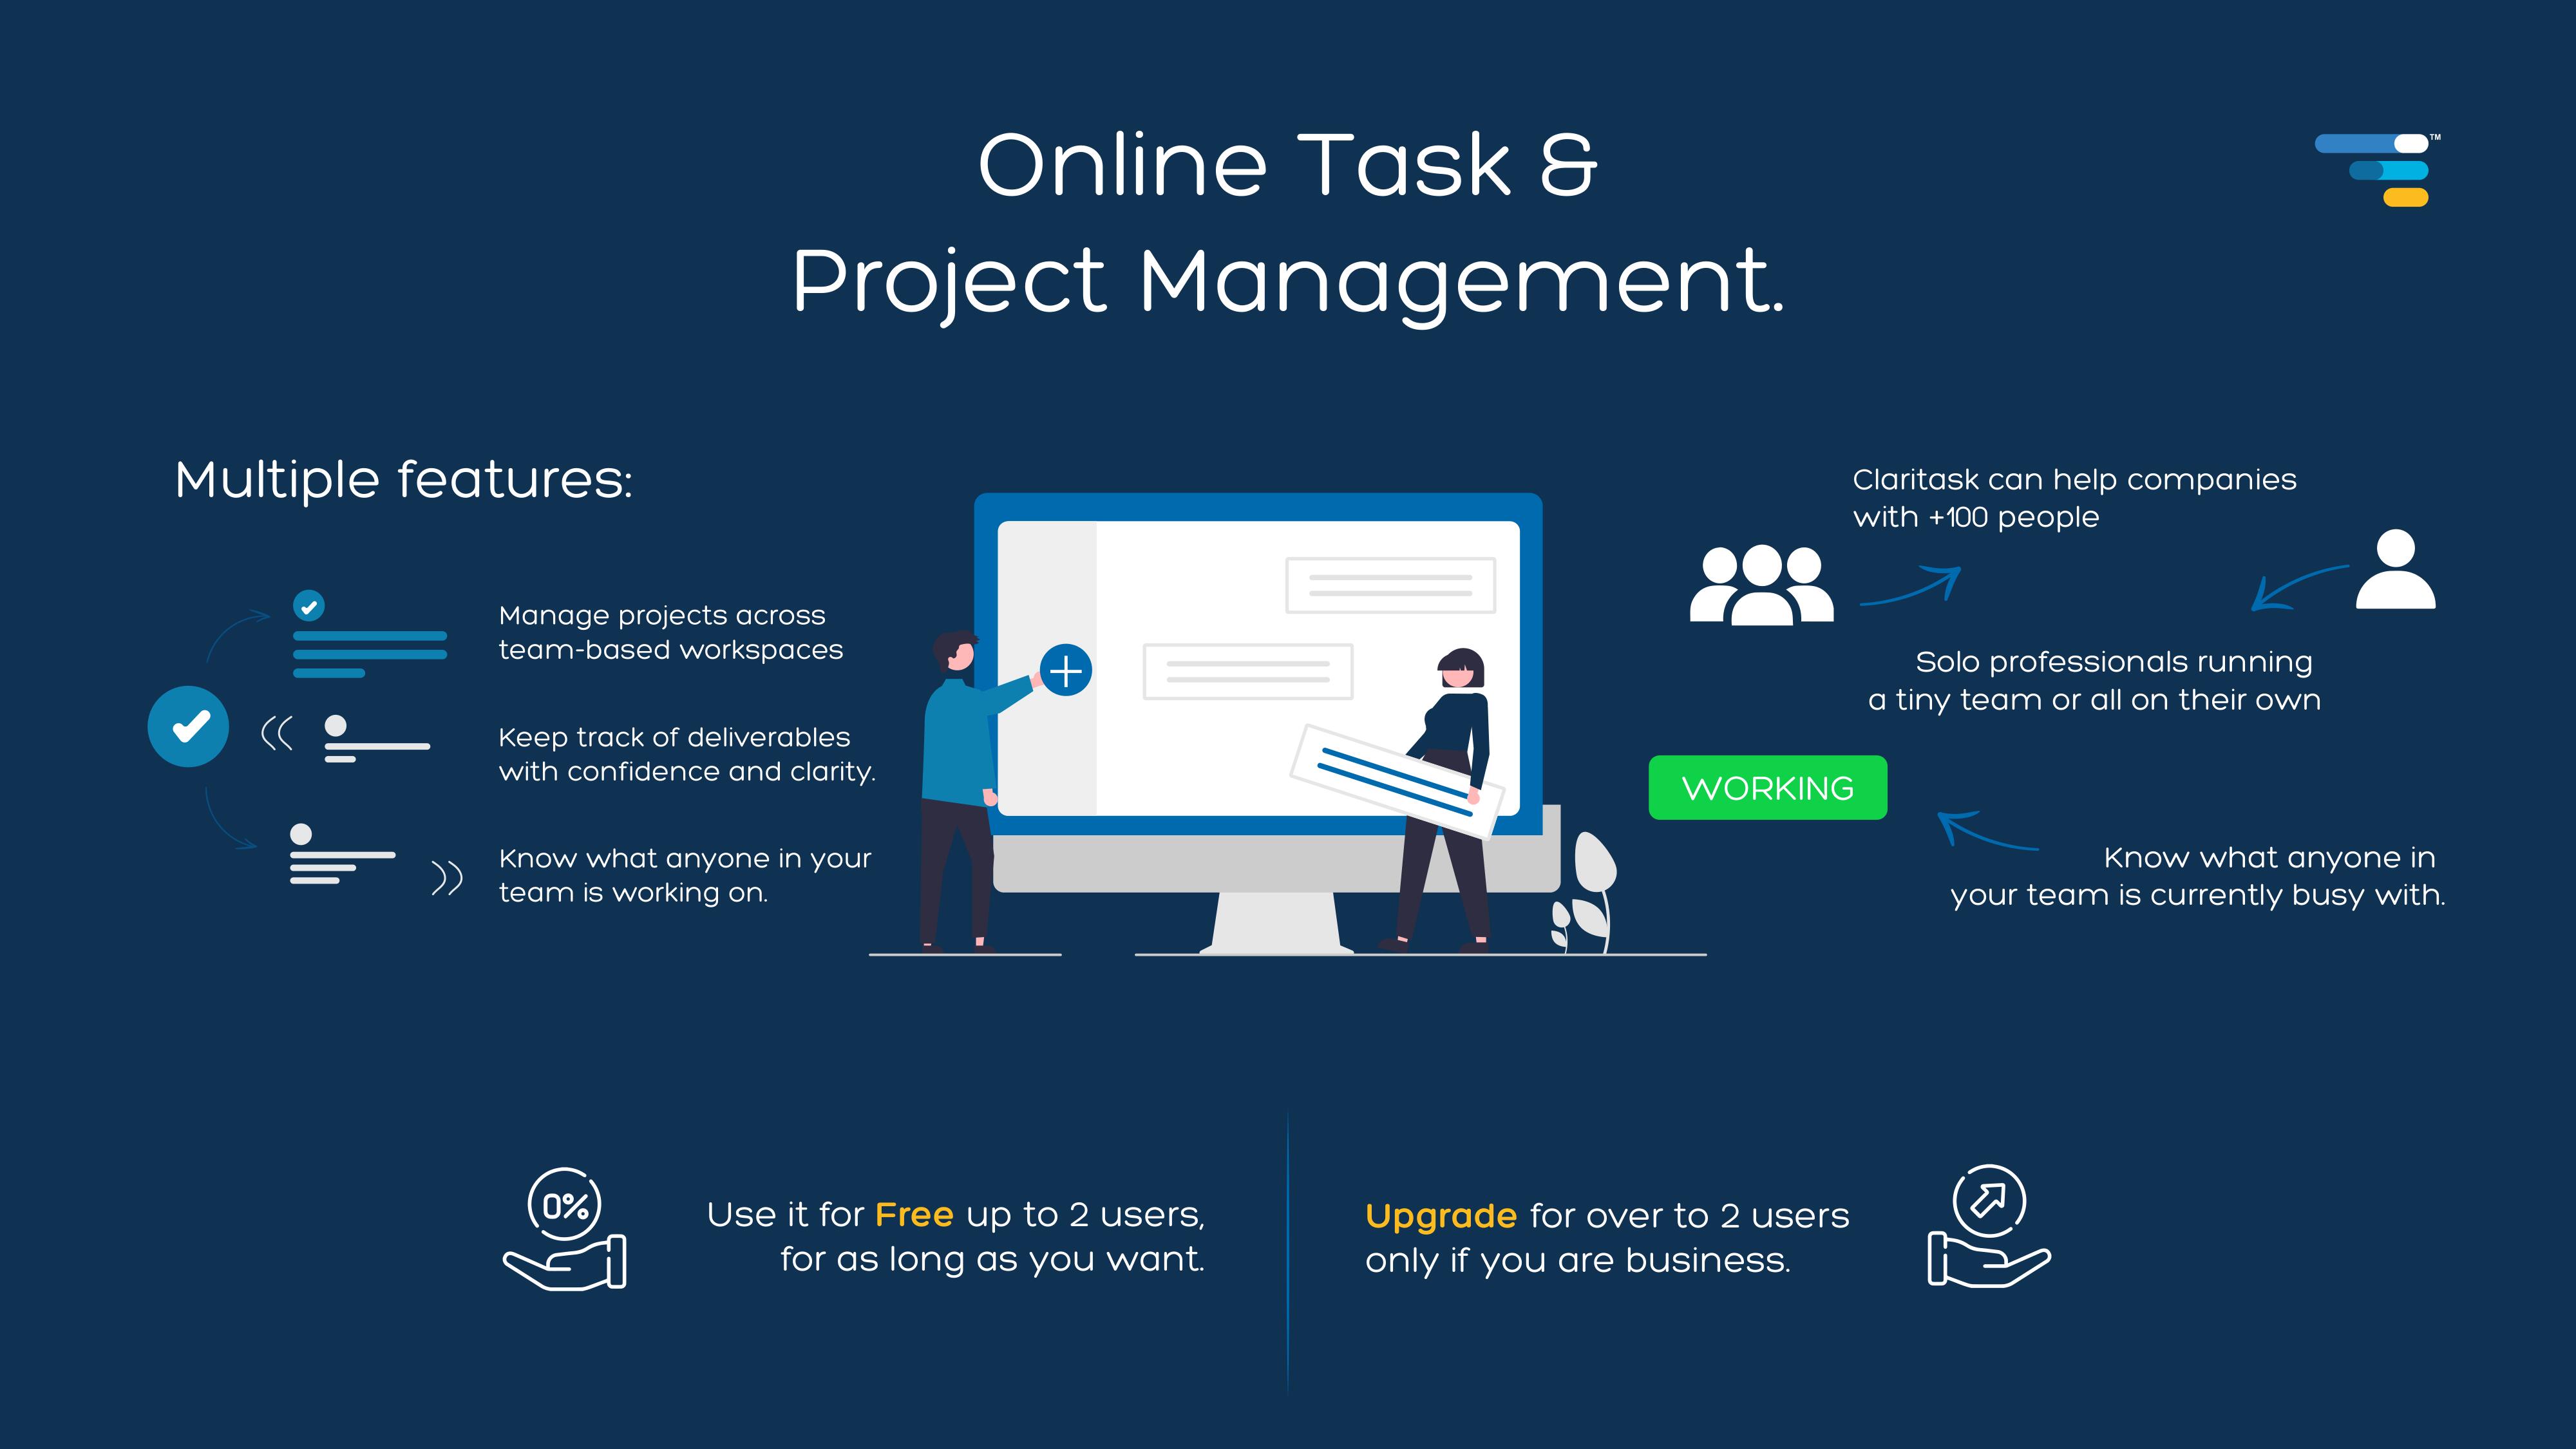 Online Task & Project Management